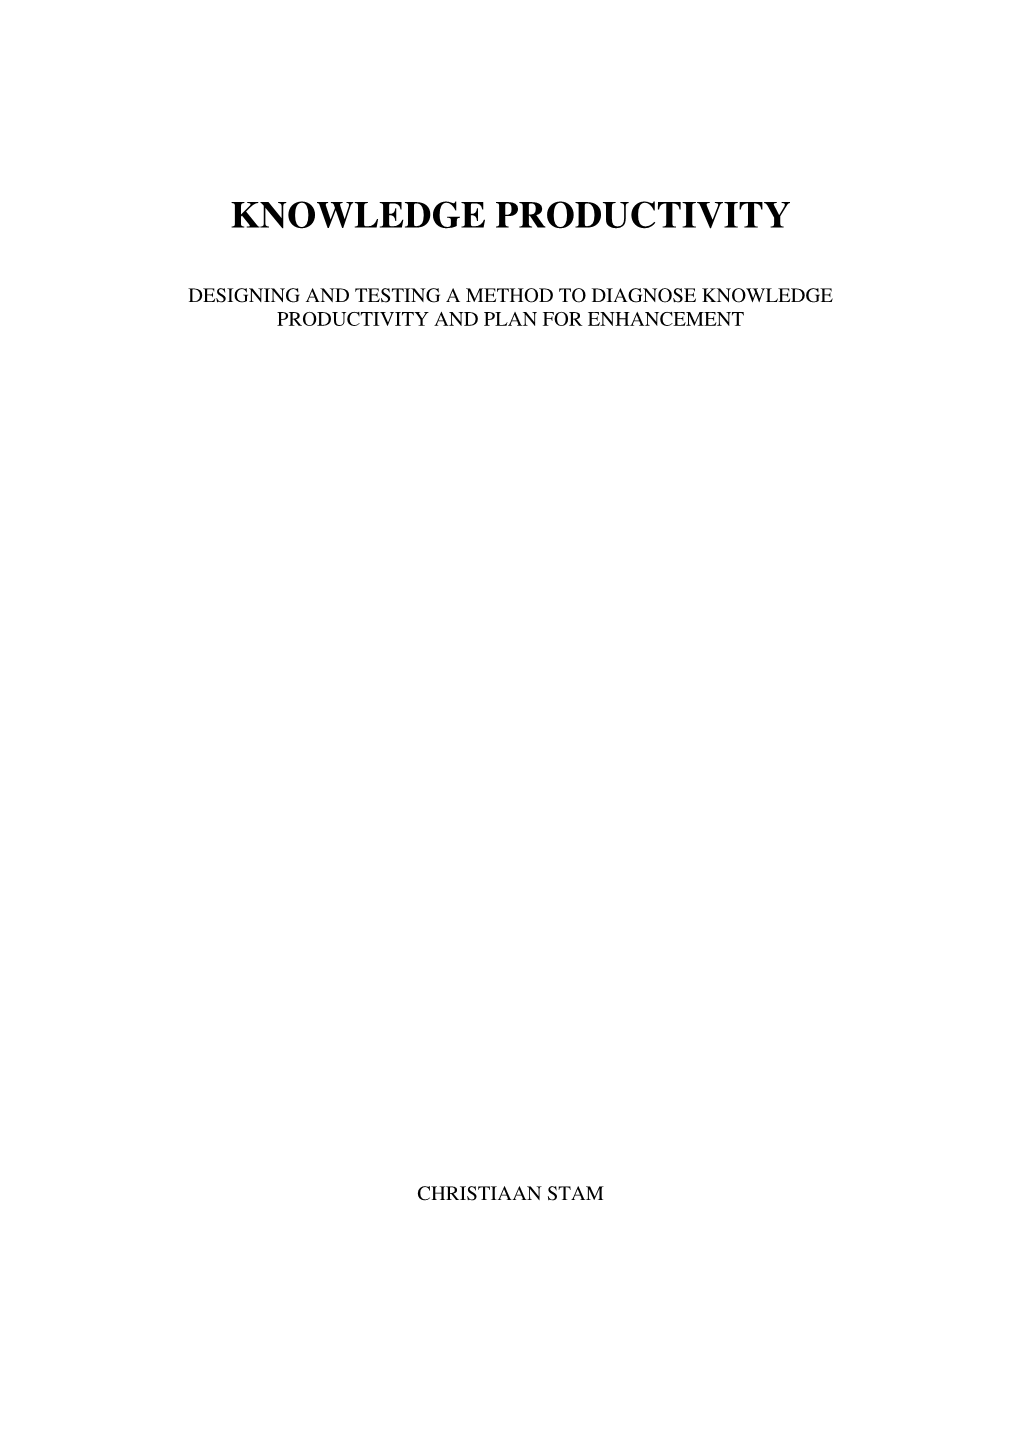 Knowledge Productivity